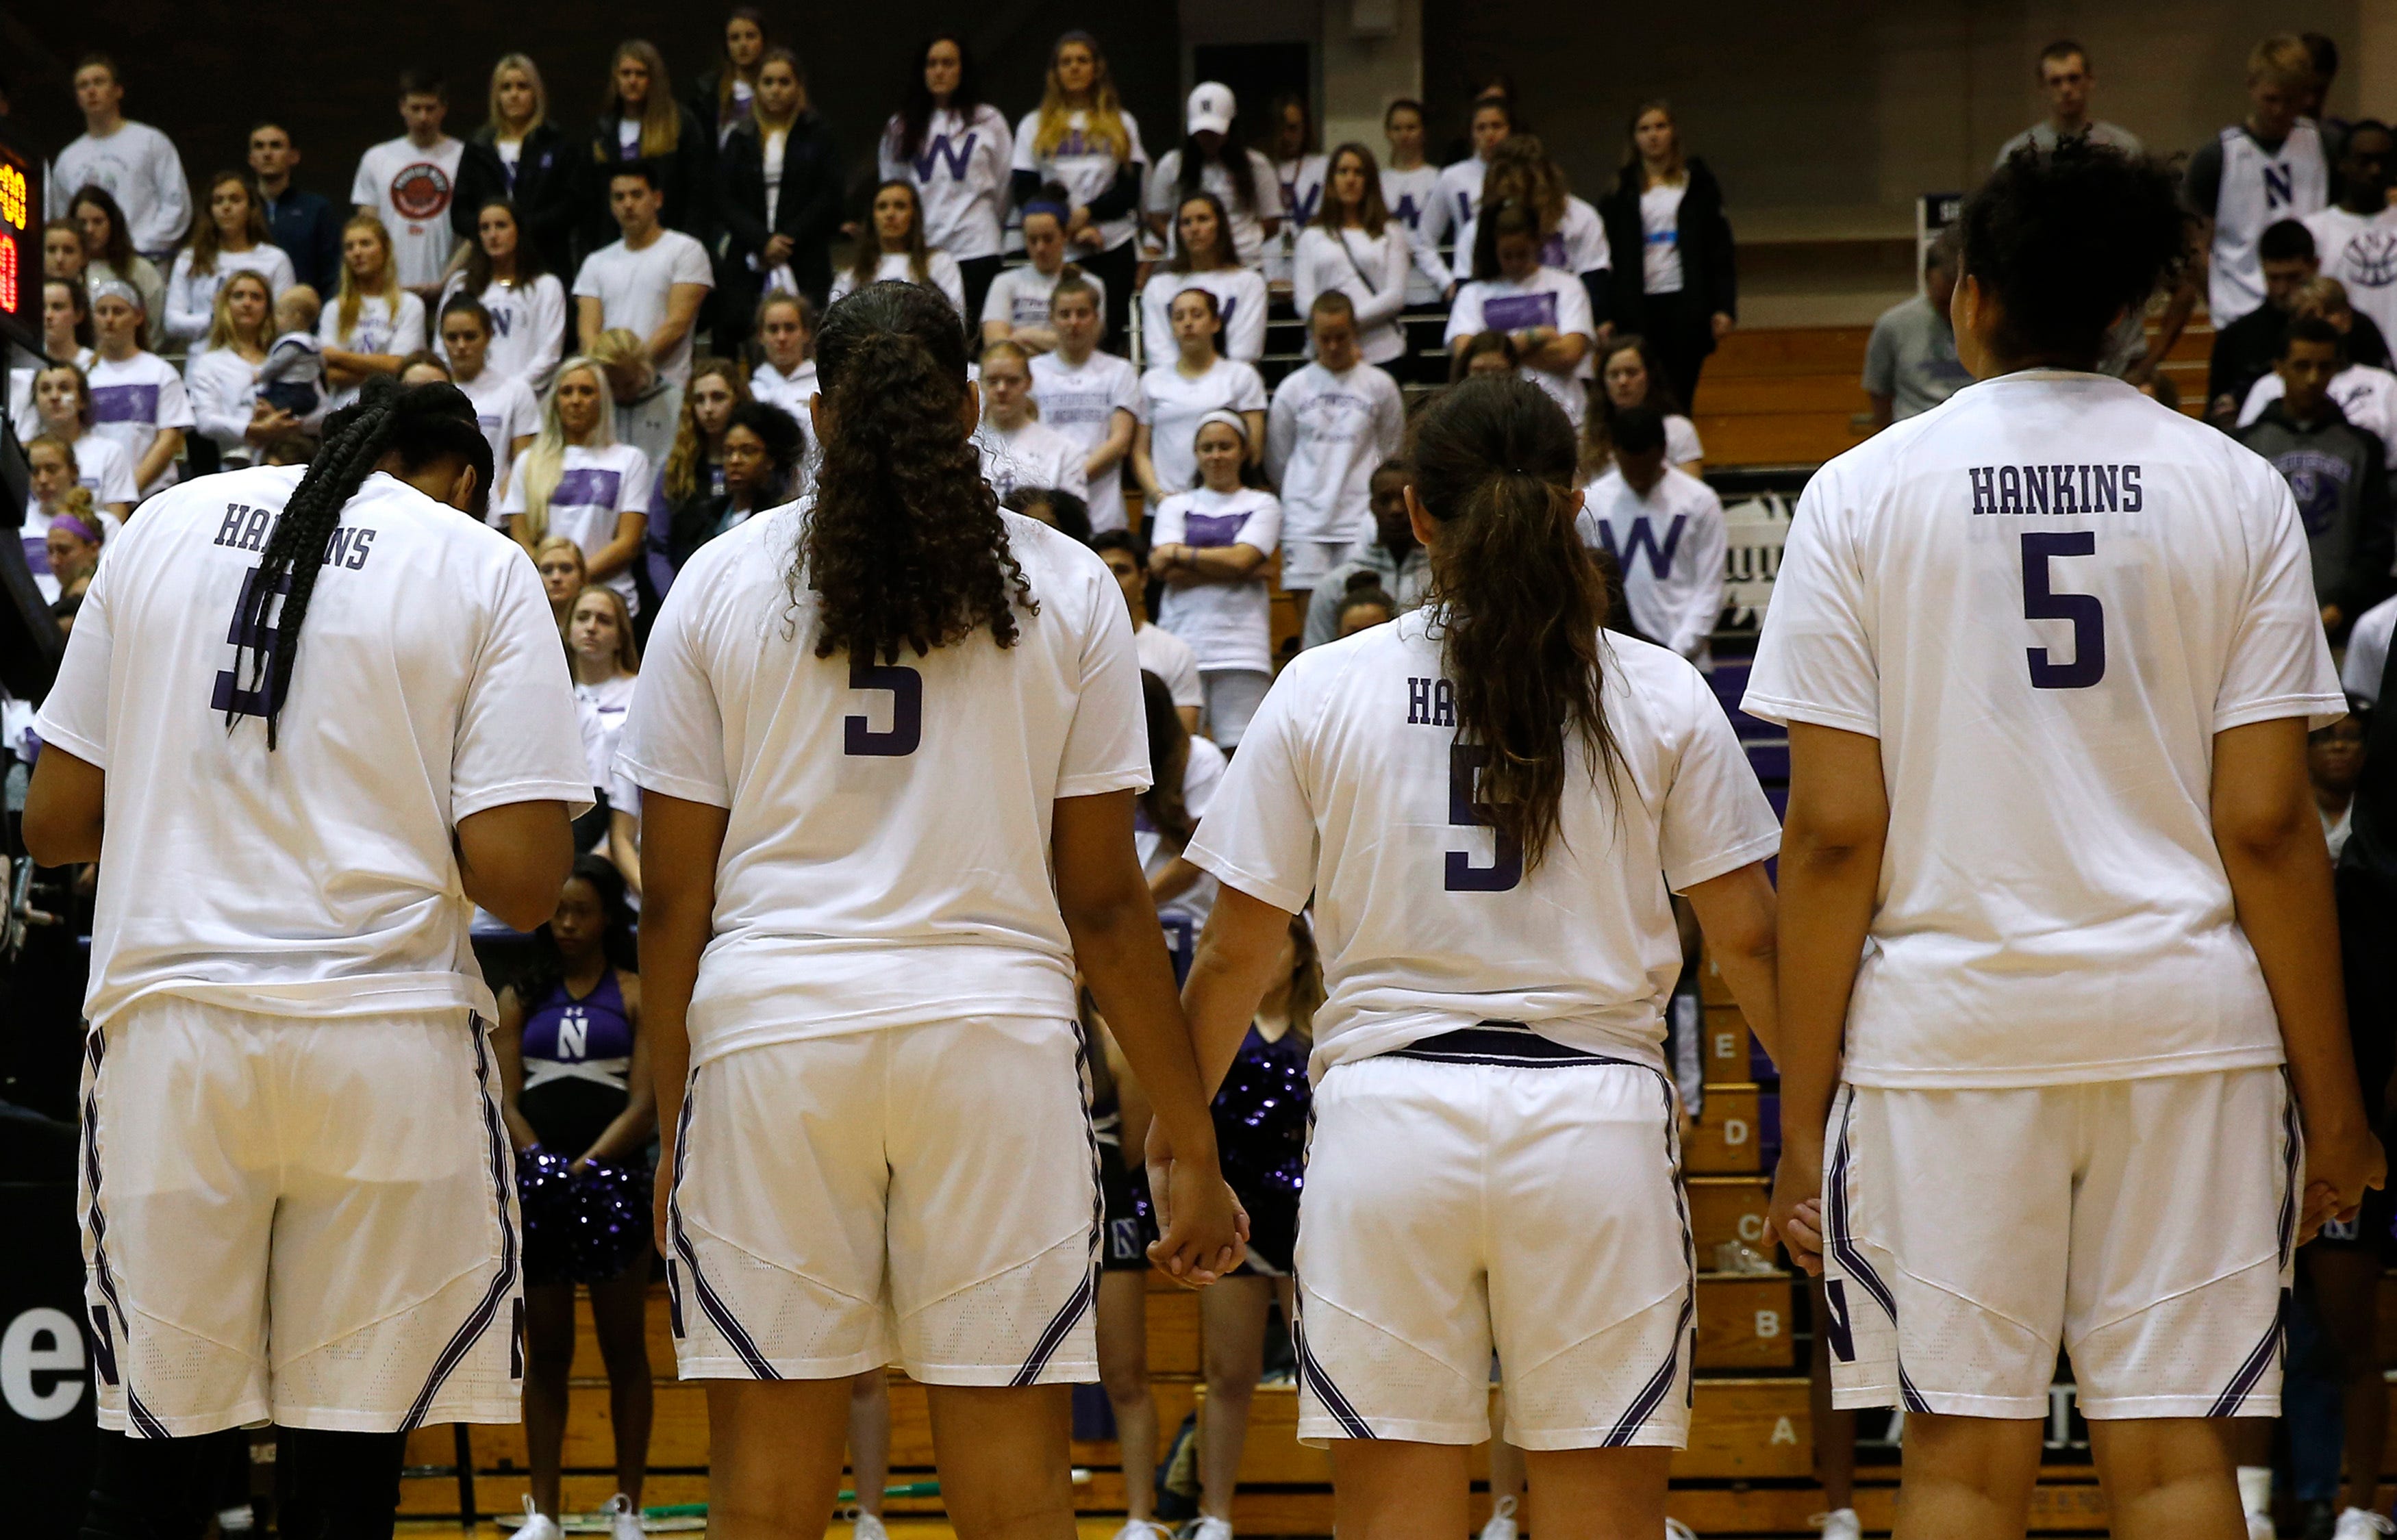 Northwestern women's hoops wins 1st game since Hankins death